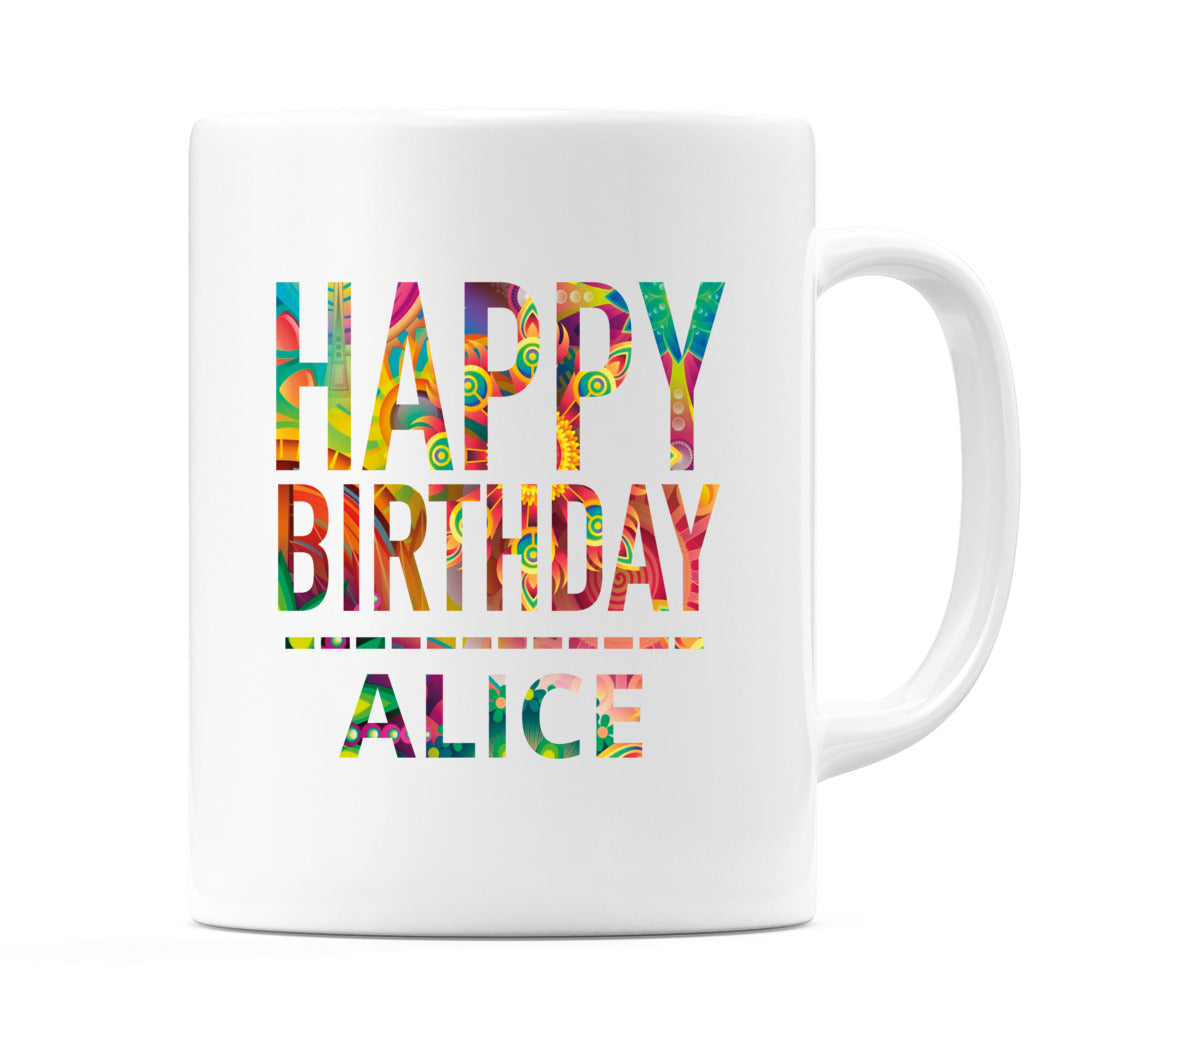 Happy Birthday Alice (Tie Dye Effect) Mug Cup by WeDoMugs